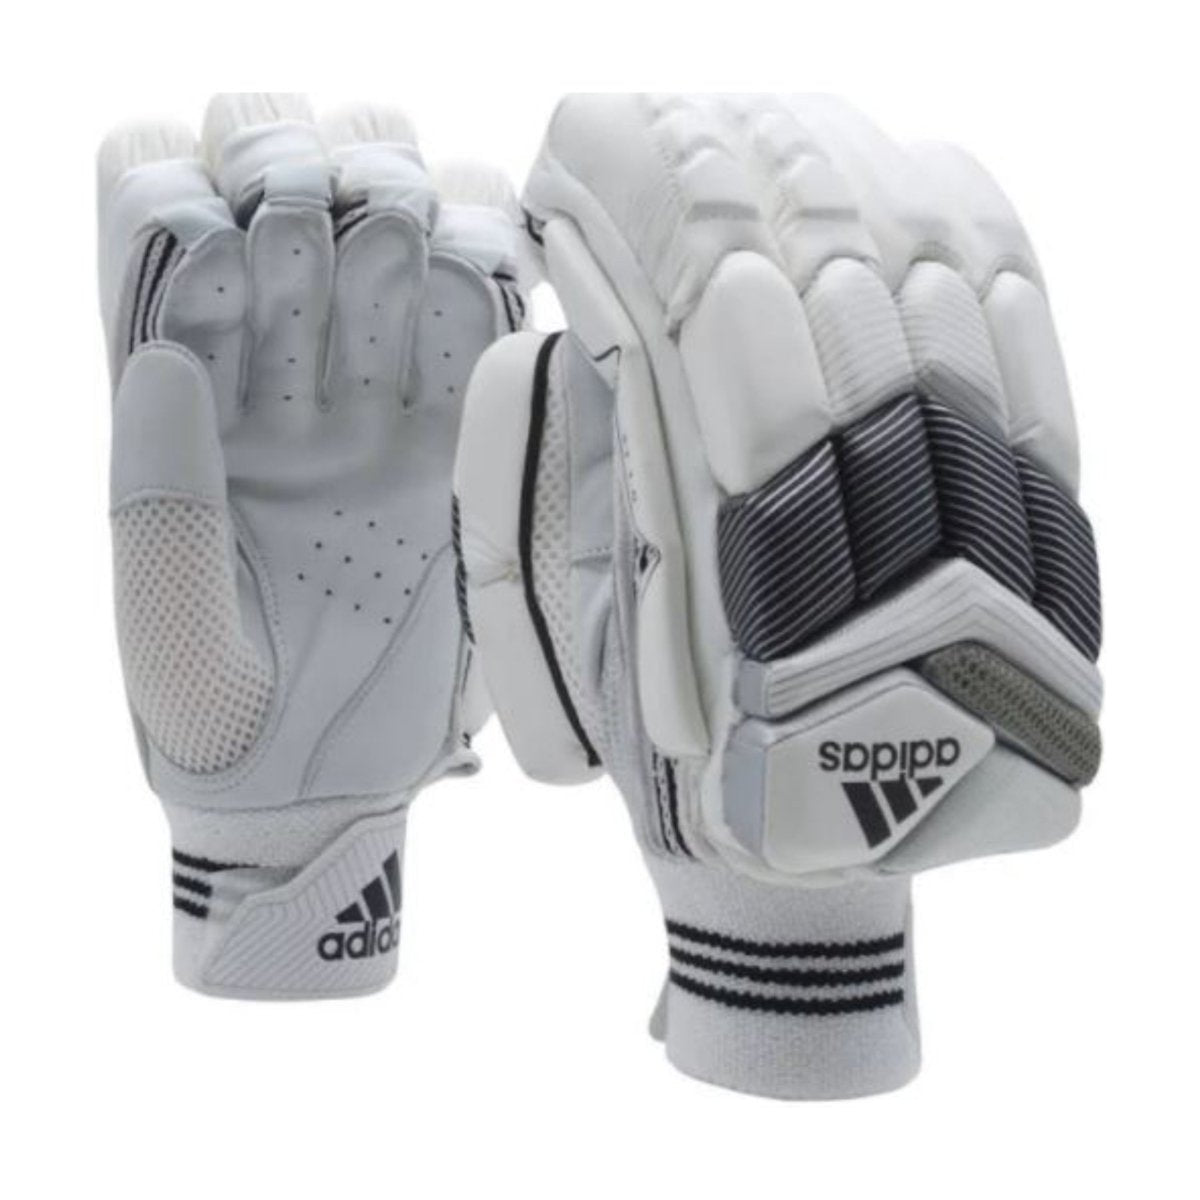 Adidas XT 1.0 Cricket Batting Gloves